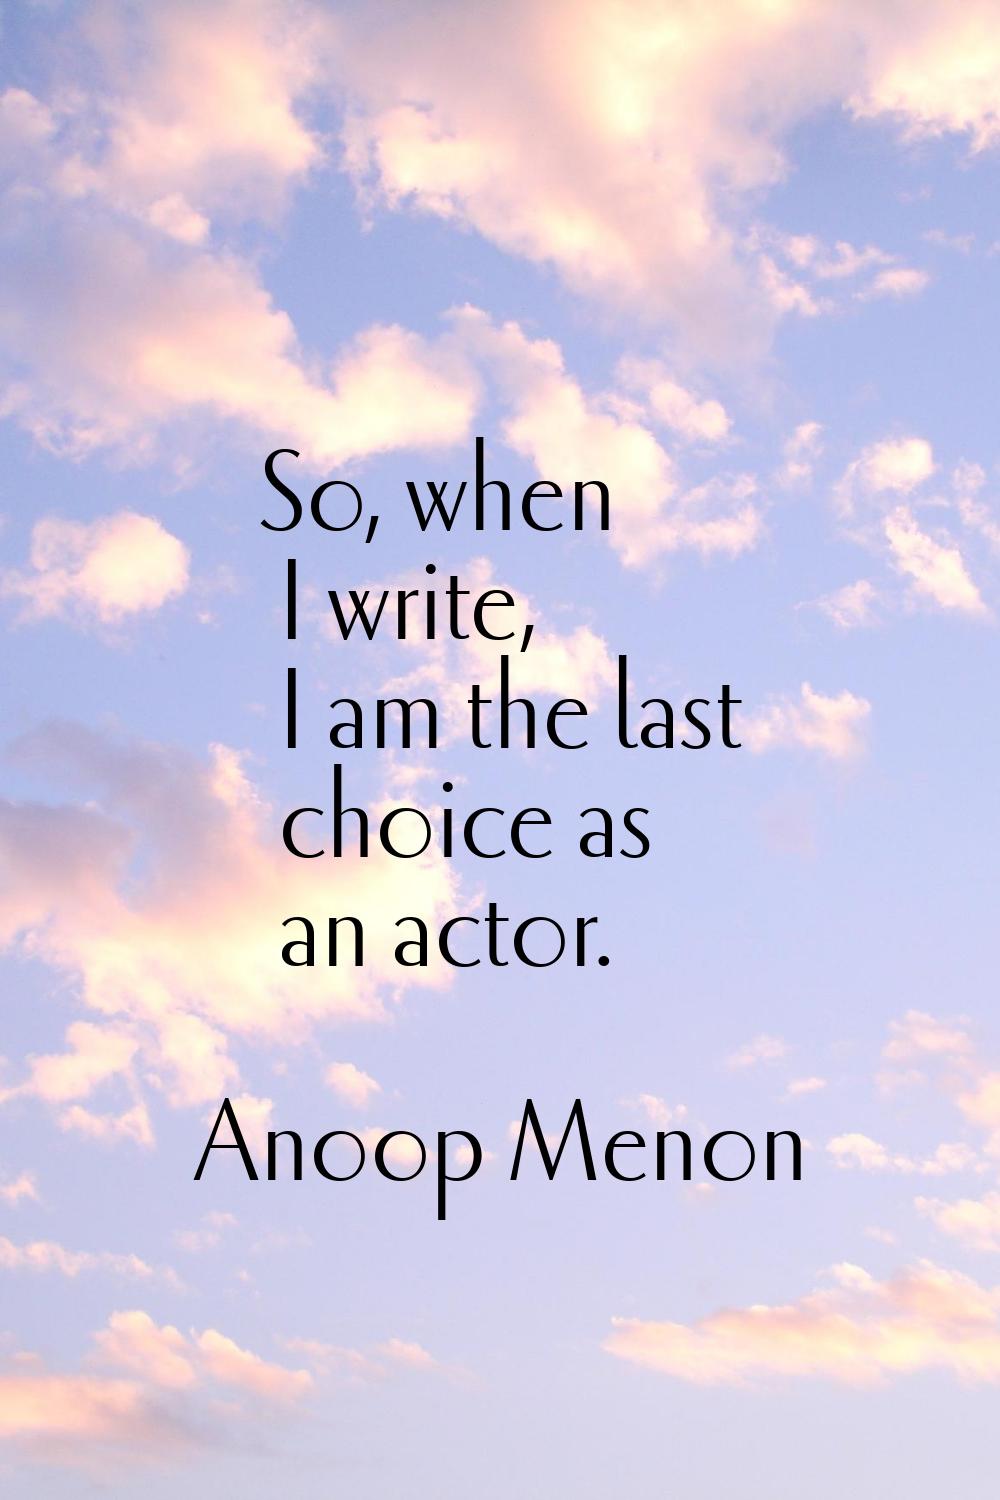 So, when I write, I am the last choice as an actor.